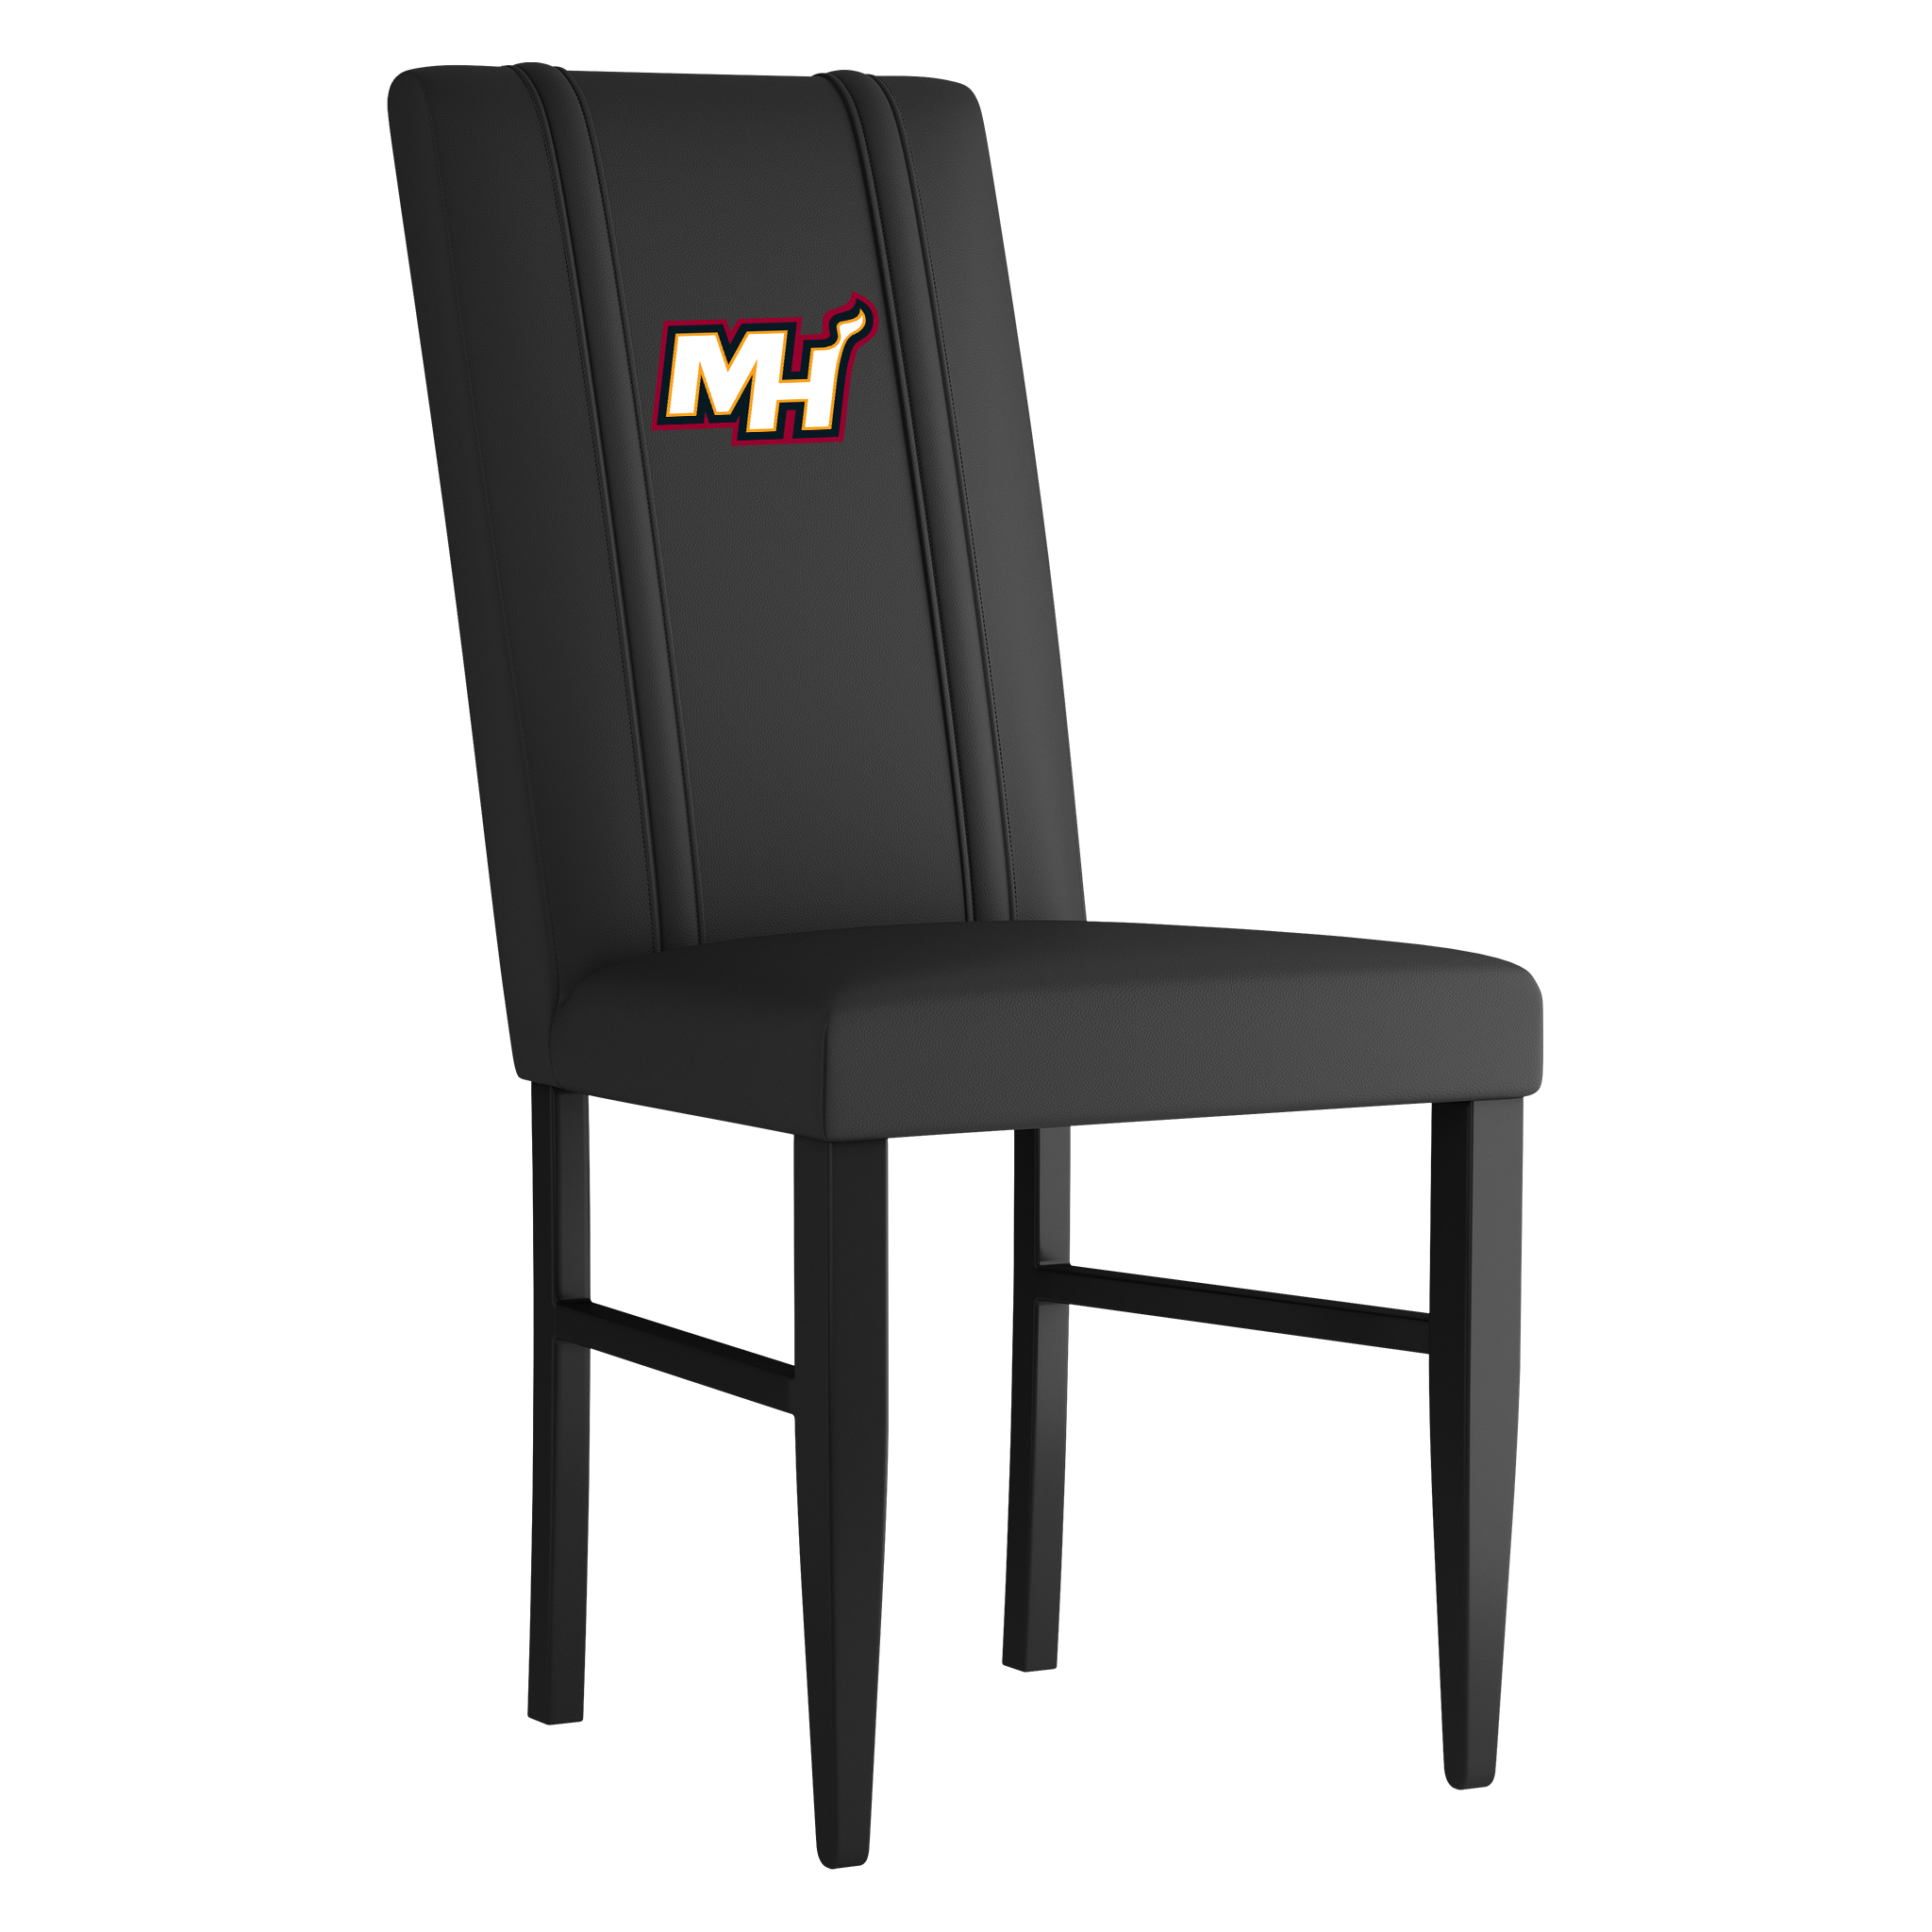 Miami Heat Side Chair 2000 Miami Heat Secondary Logo